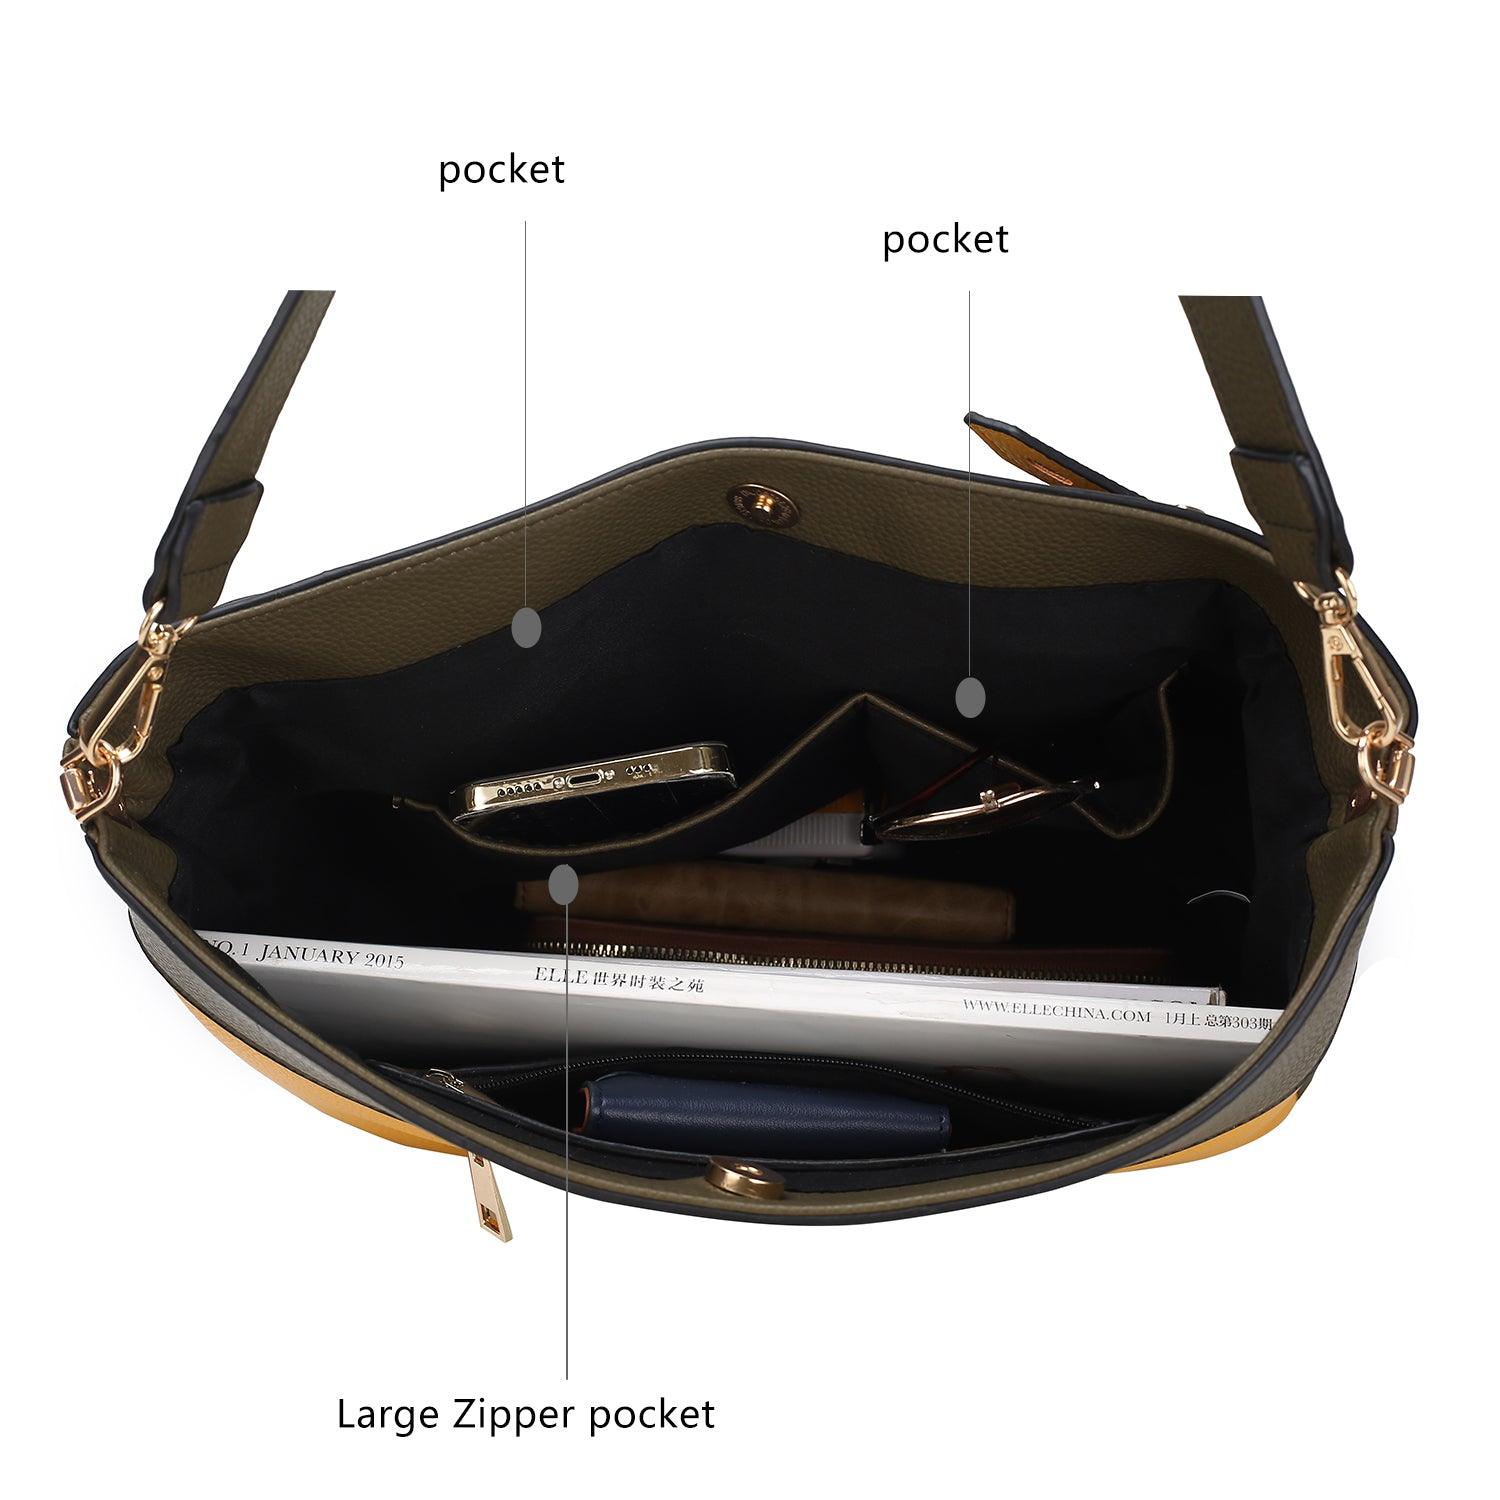 Wallets, Handbags & Accessories Evie Two Tone Vegan Leather Women Shoulder Bag